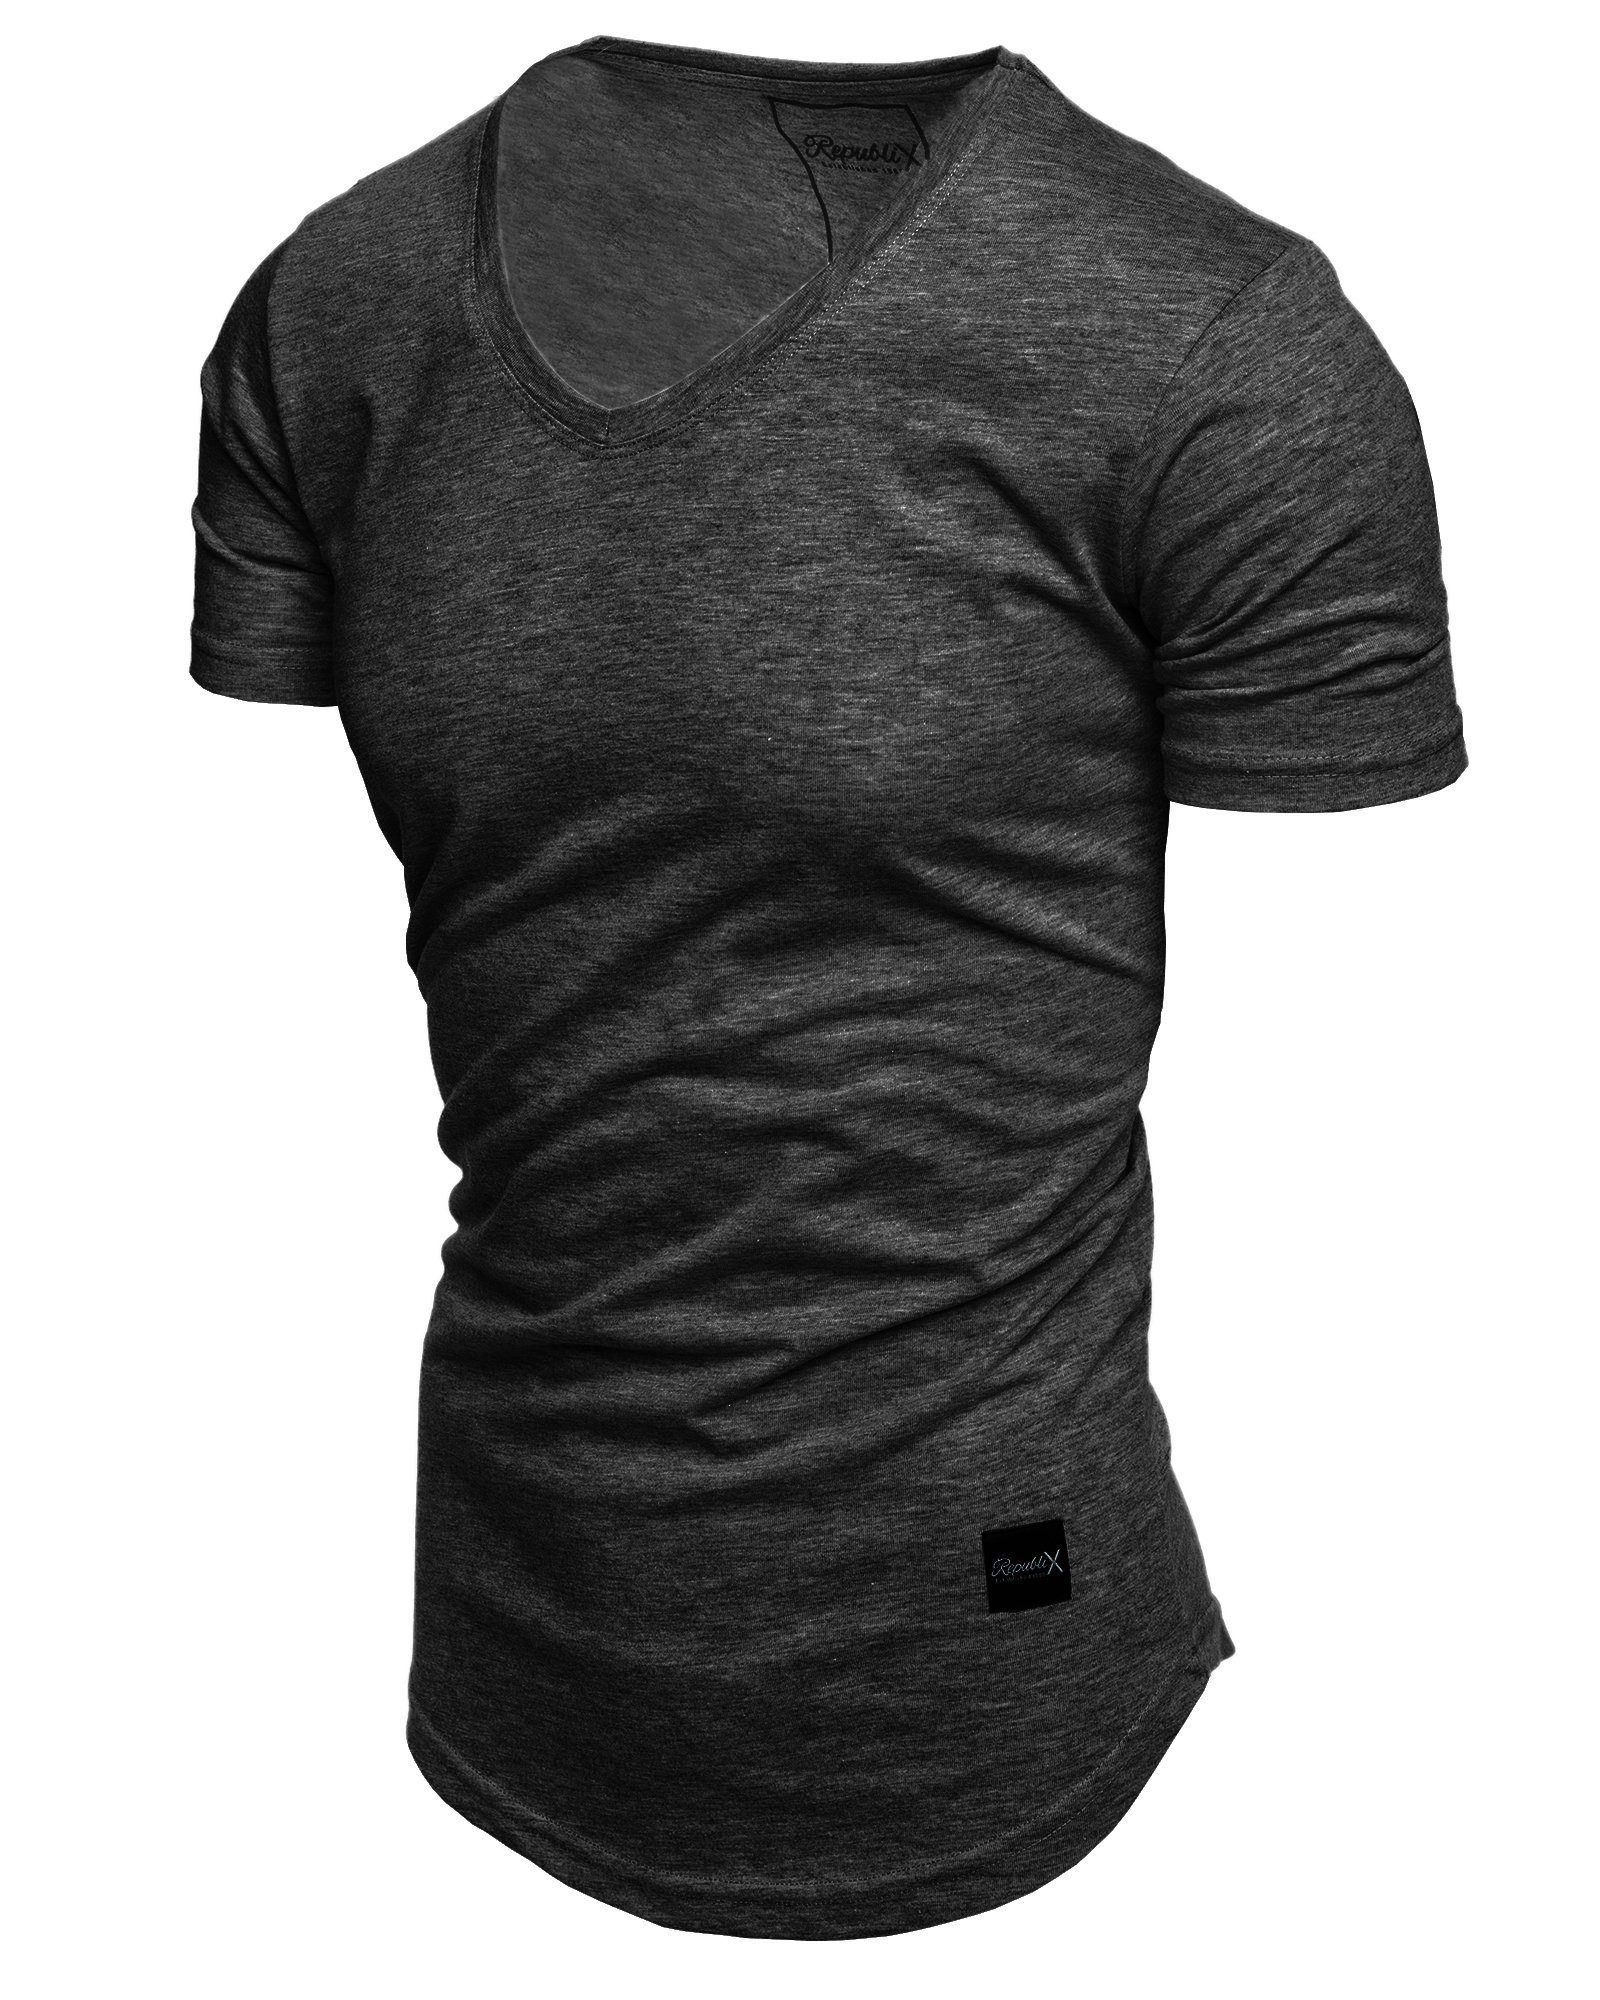 REPUBLIX T-Shirt BRANDON mit Oversize Shirt Basic Melange Anthrazit Herren V-Ausschnitt